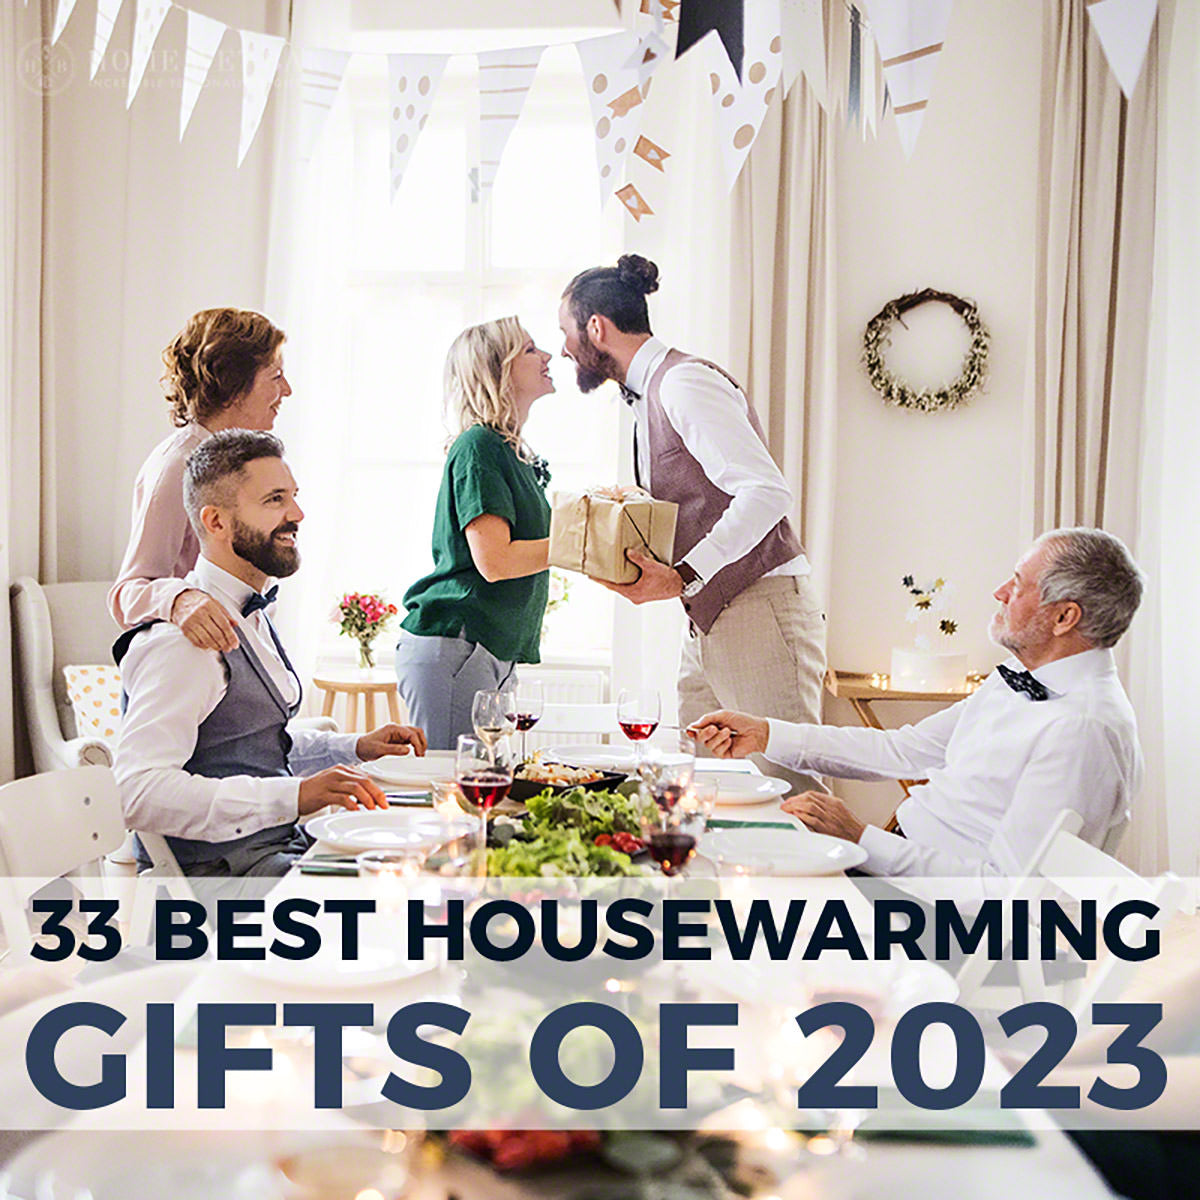 15 Beautiful Housewarming Gifts Under $100 at Amazon